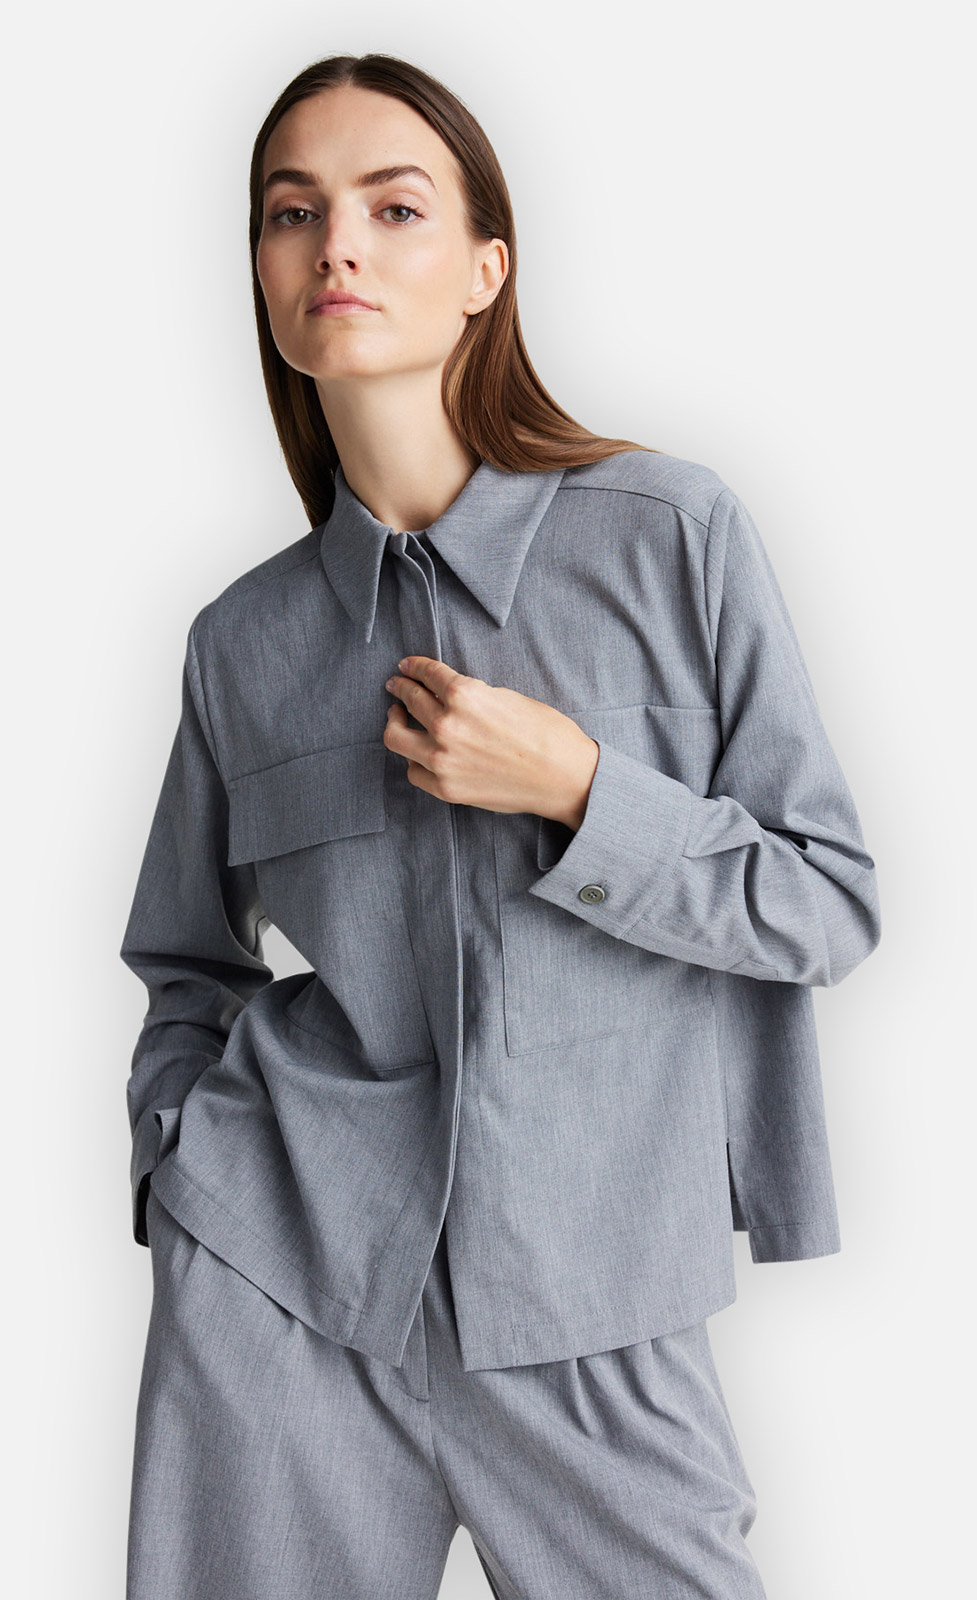 Laceya - Overshirt im Workwear-Stil